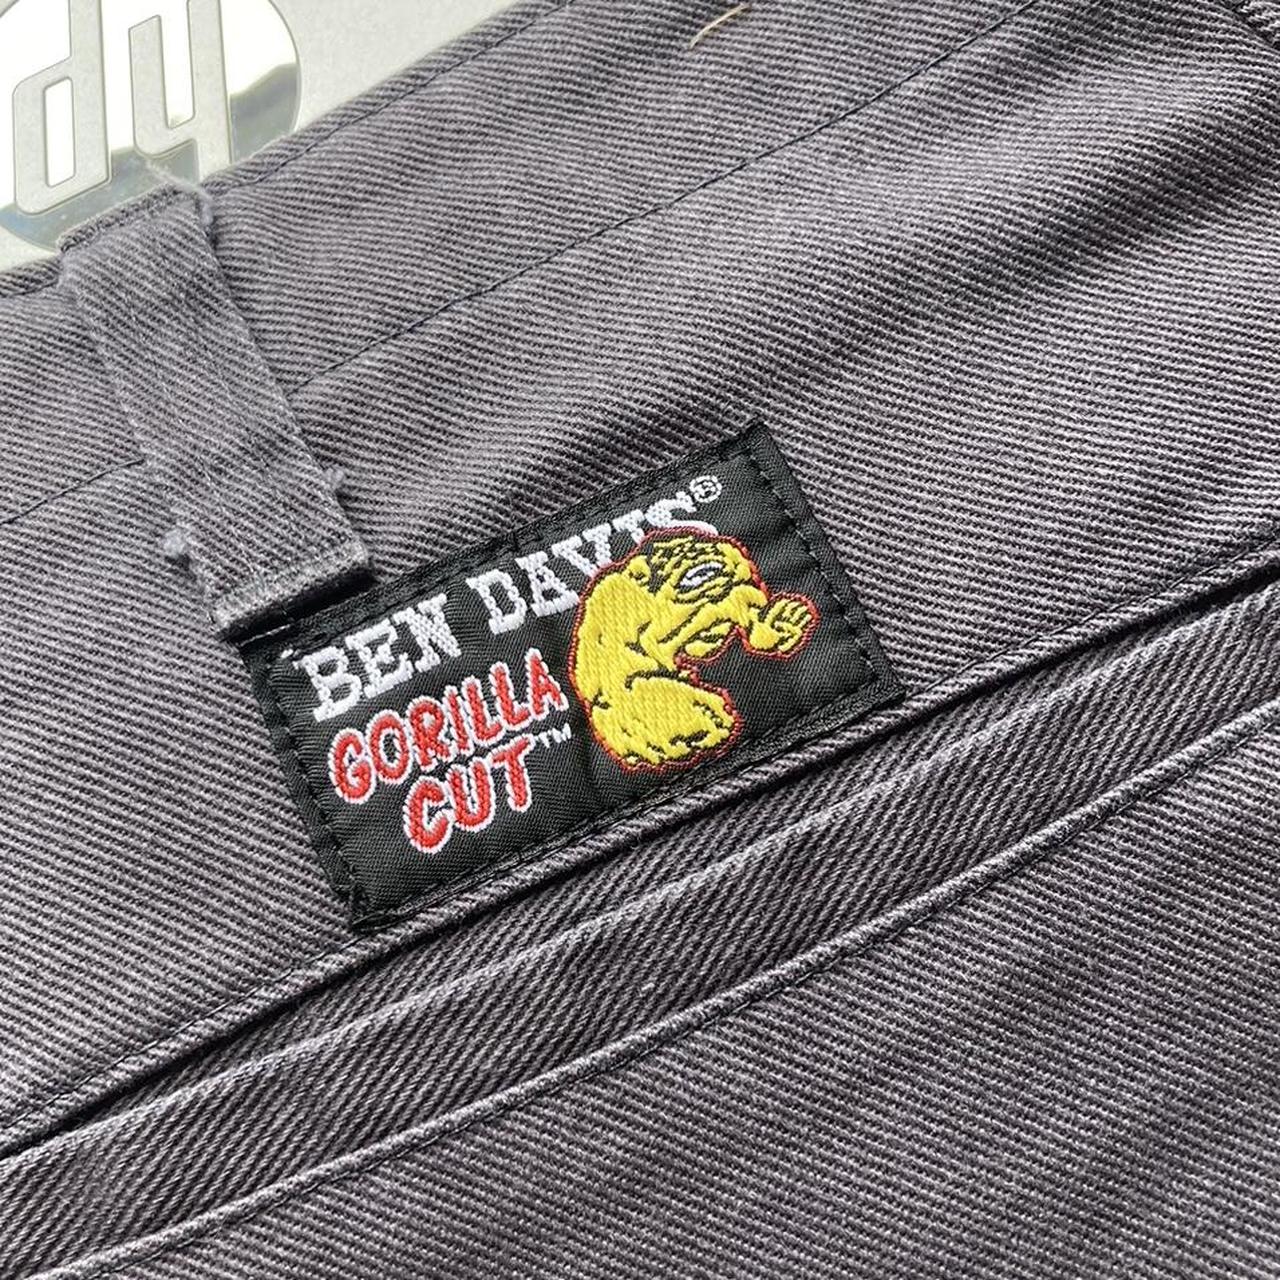 vintage ben davis gorilla cut pants 9/10... - Depop